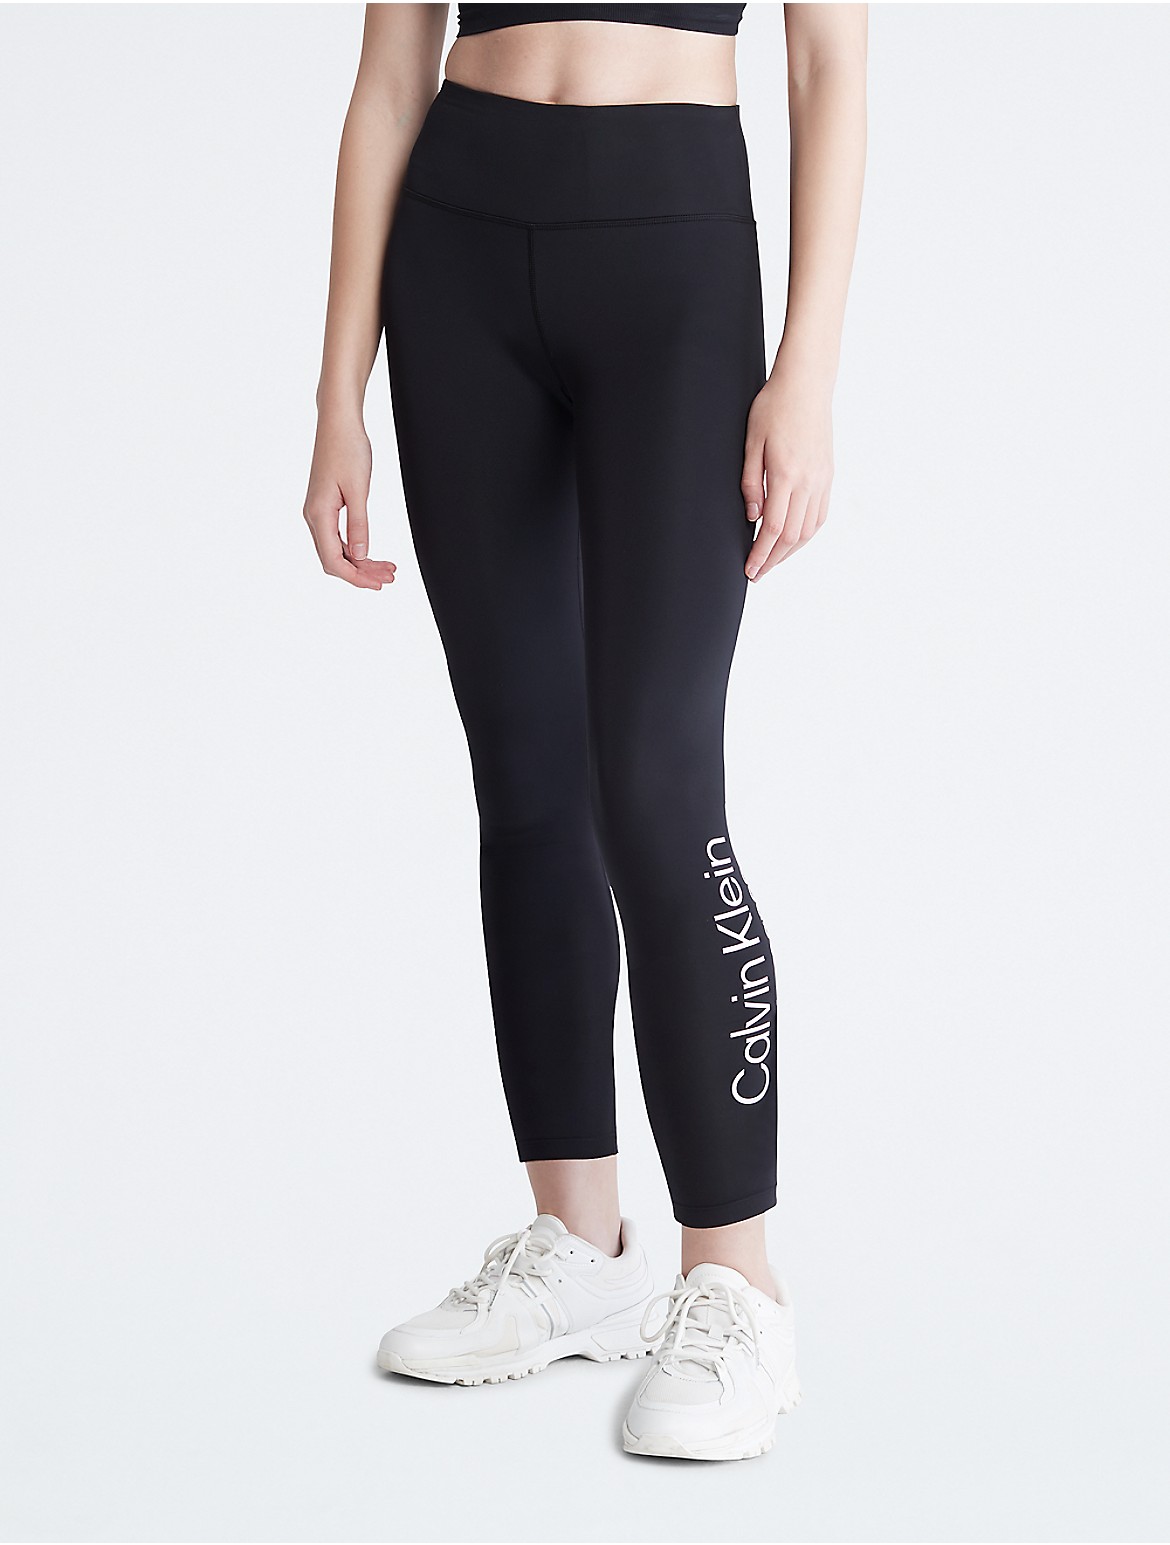 Calvin Klein Women's Performance Sleek High Rise 7/8 Leggings - Black - XL